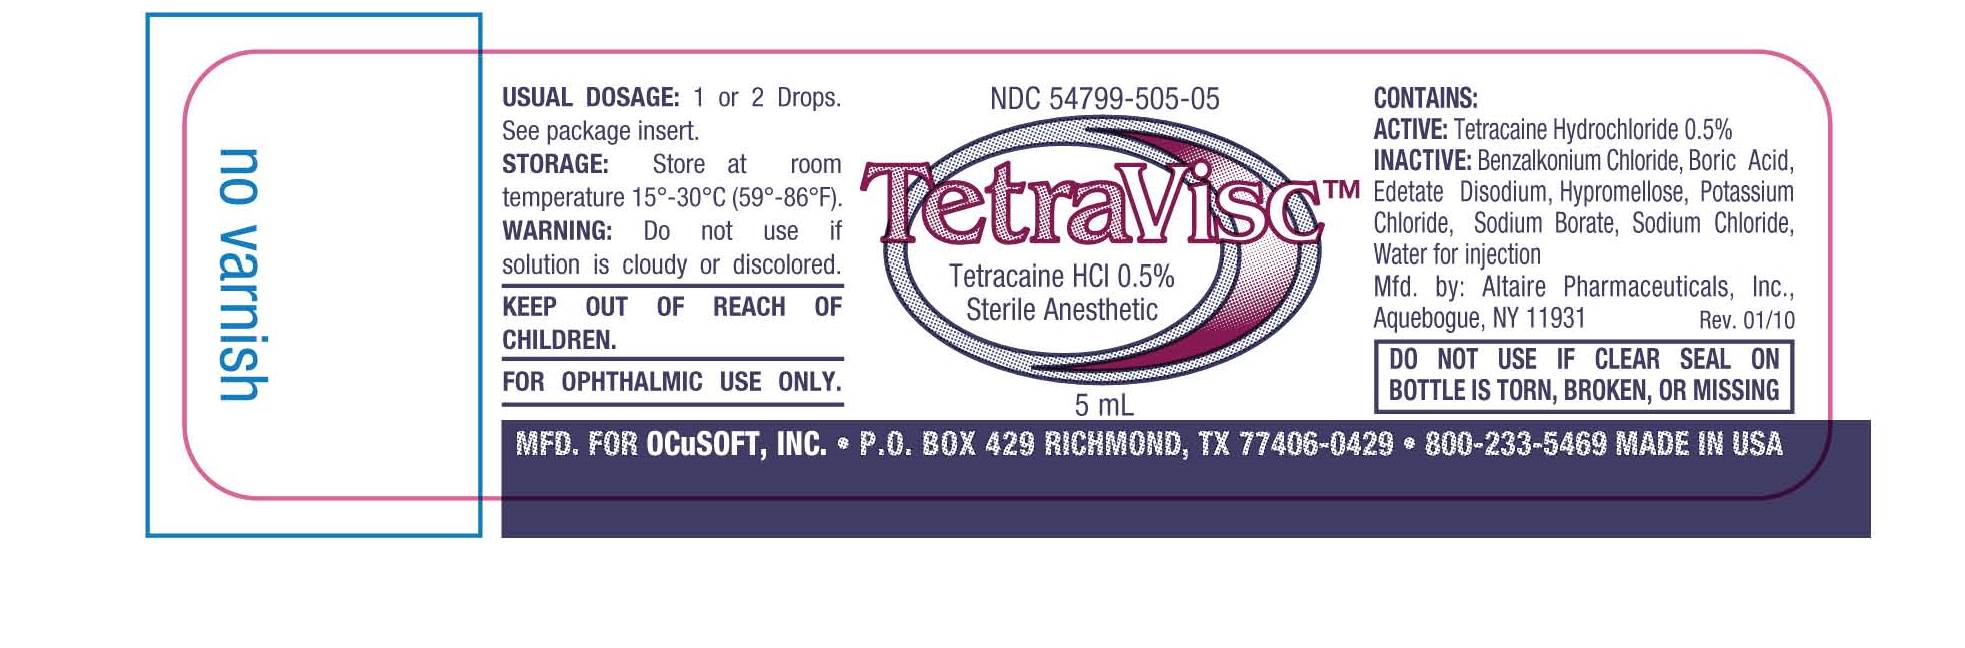 tetravisc bottle label